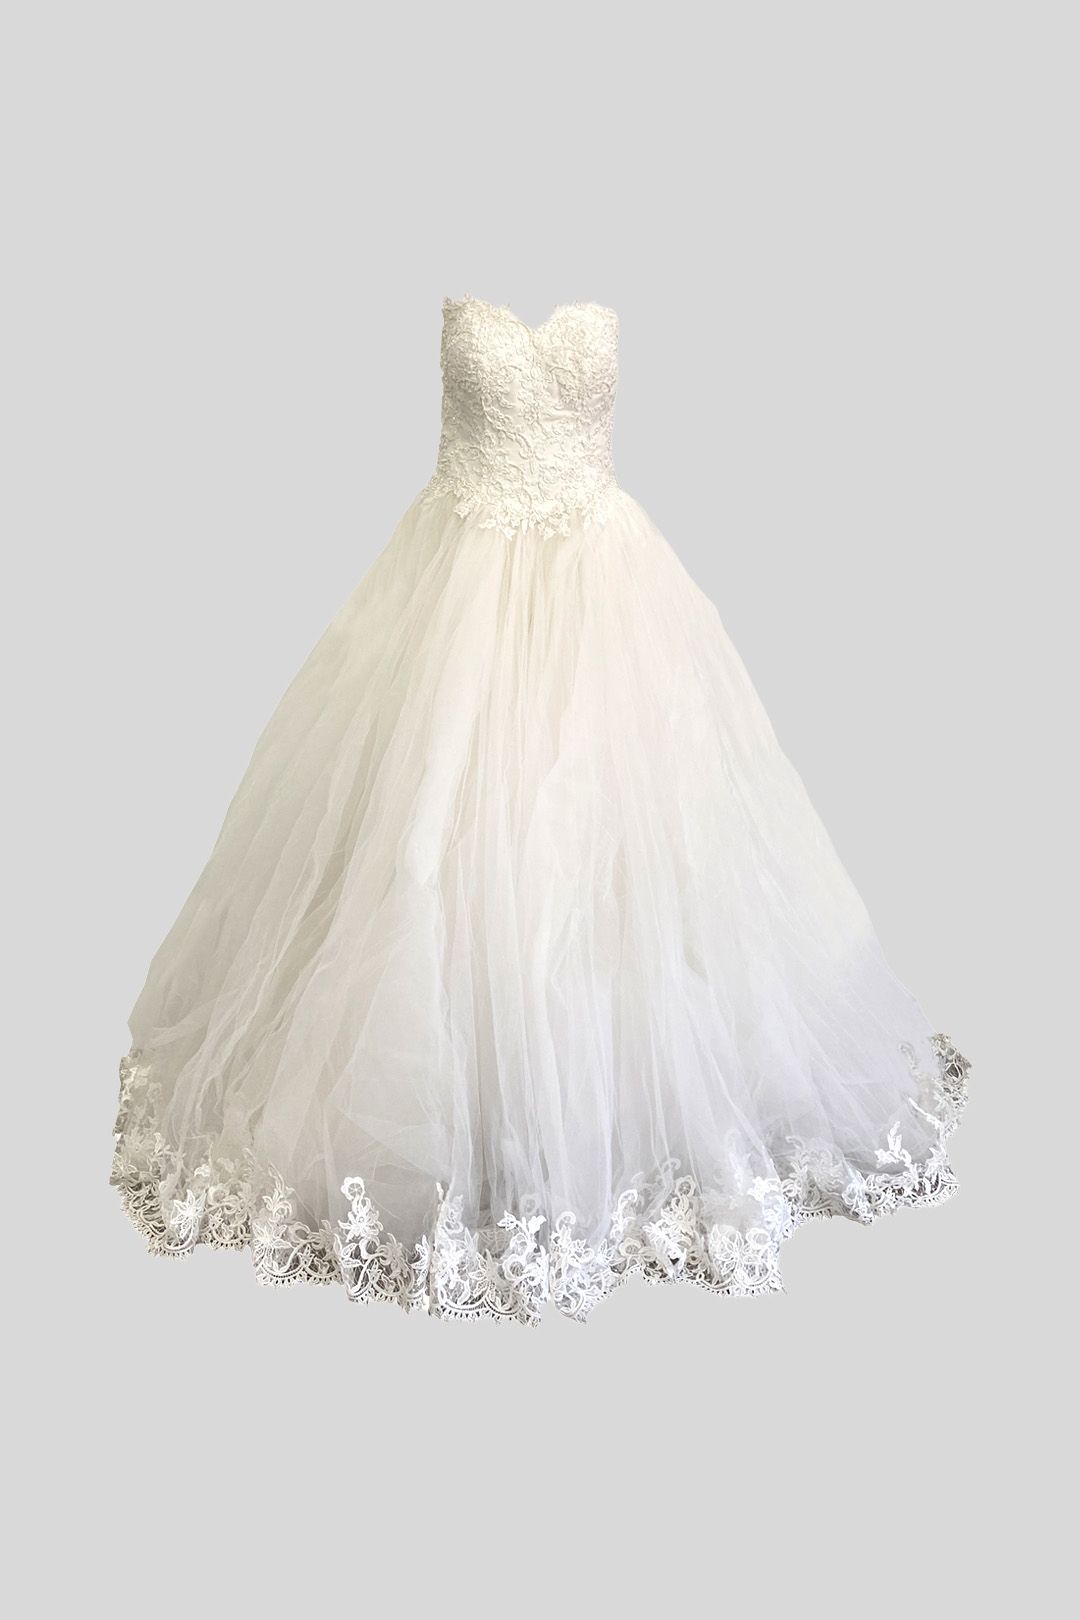 Idora Bridal - Princess Ballgown Wedding Dress